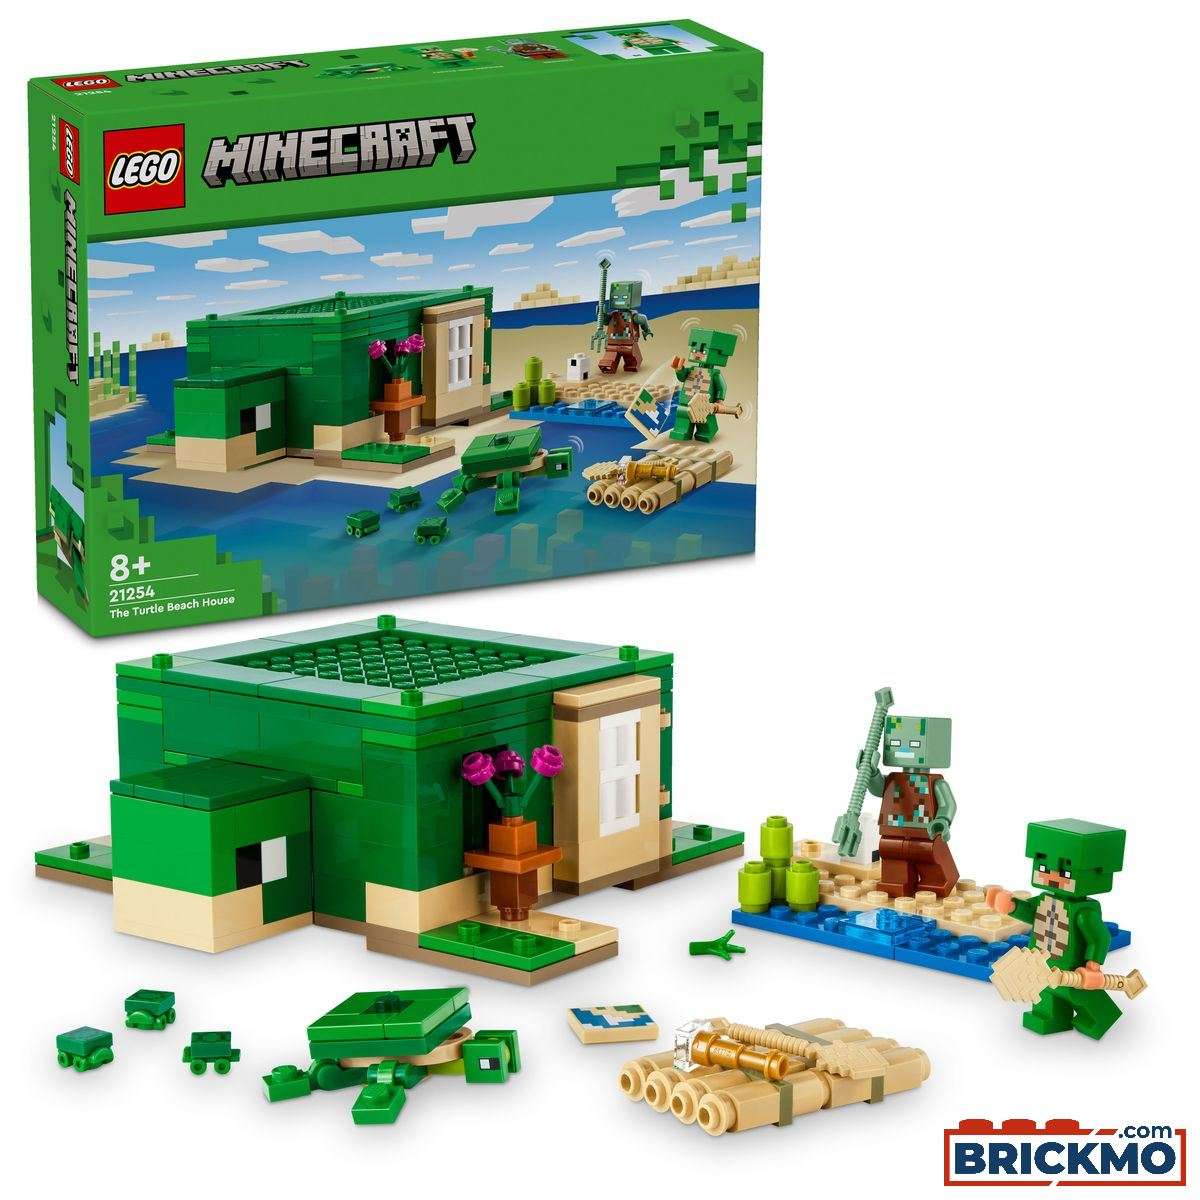 LEGO Minecraft 21254 The Turtle Beach House 21254